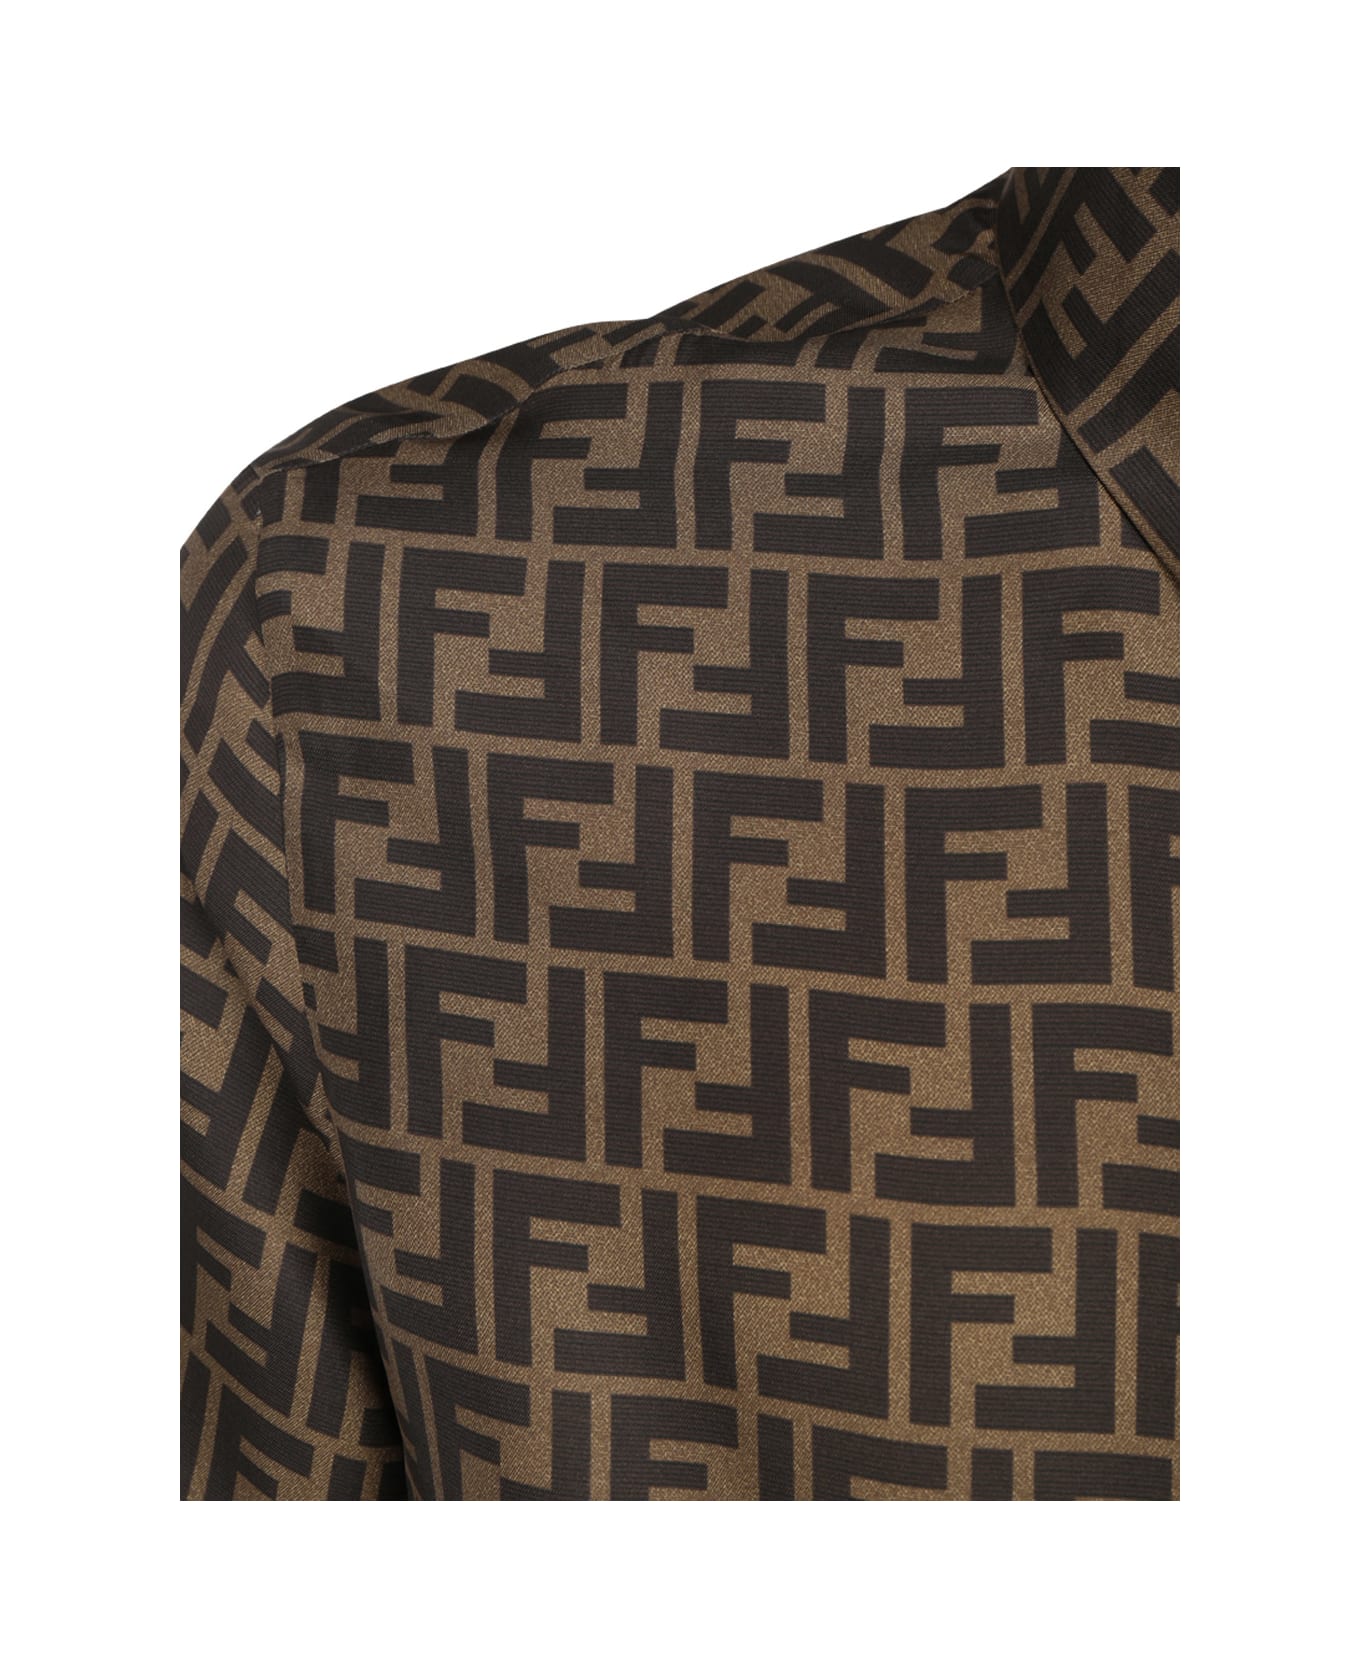 Fendi Ff Motif Short Sleeved Shirt - Fango/tabacco